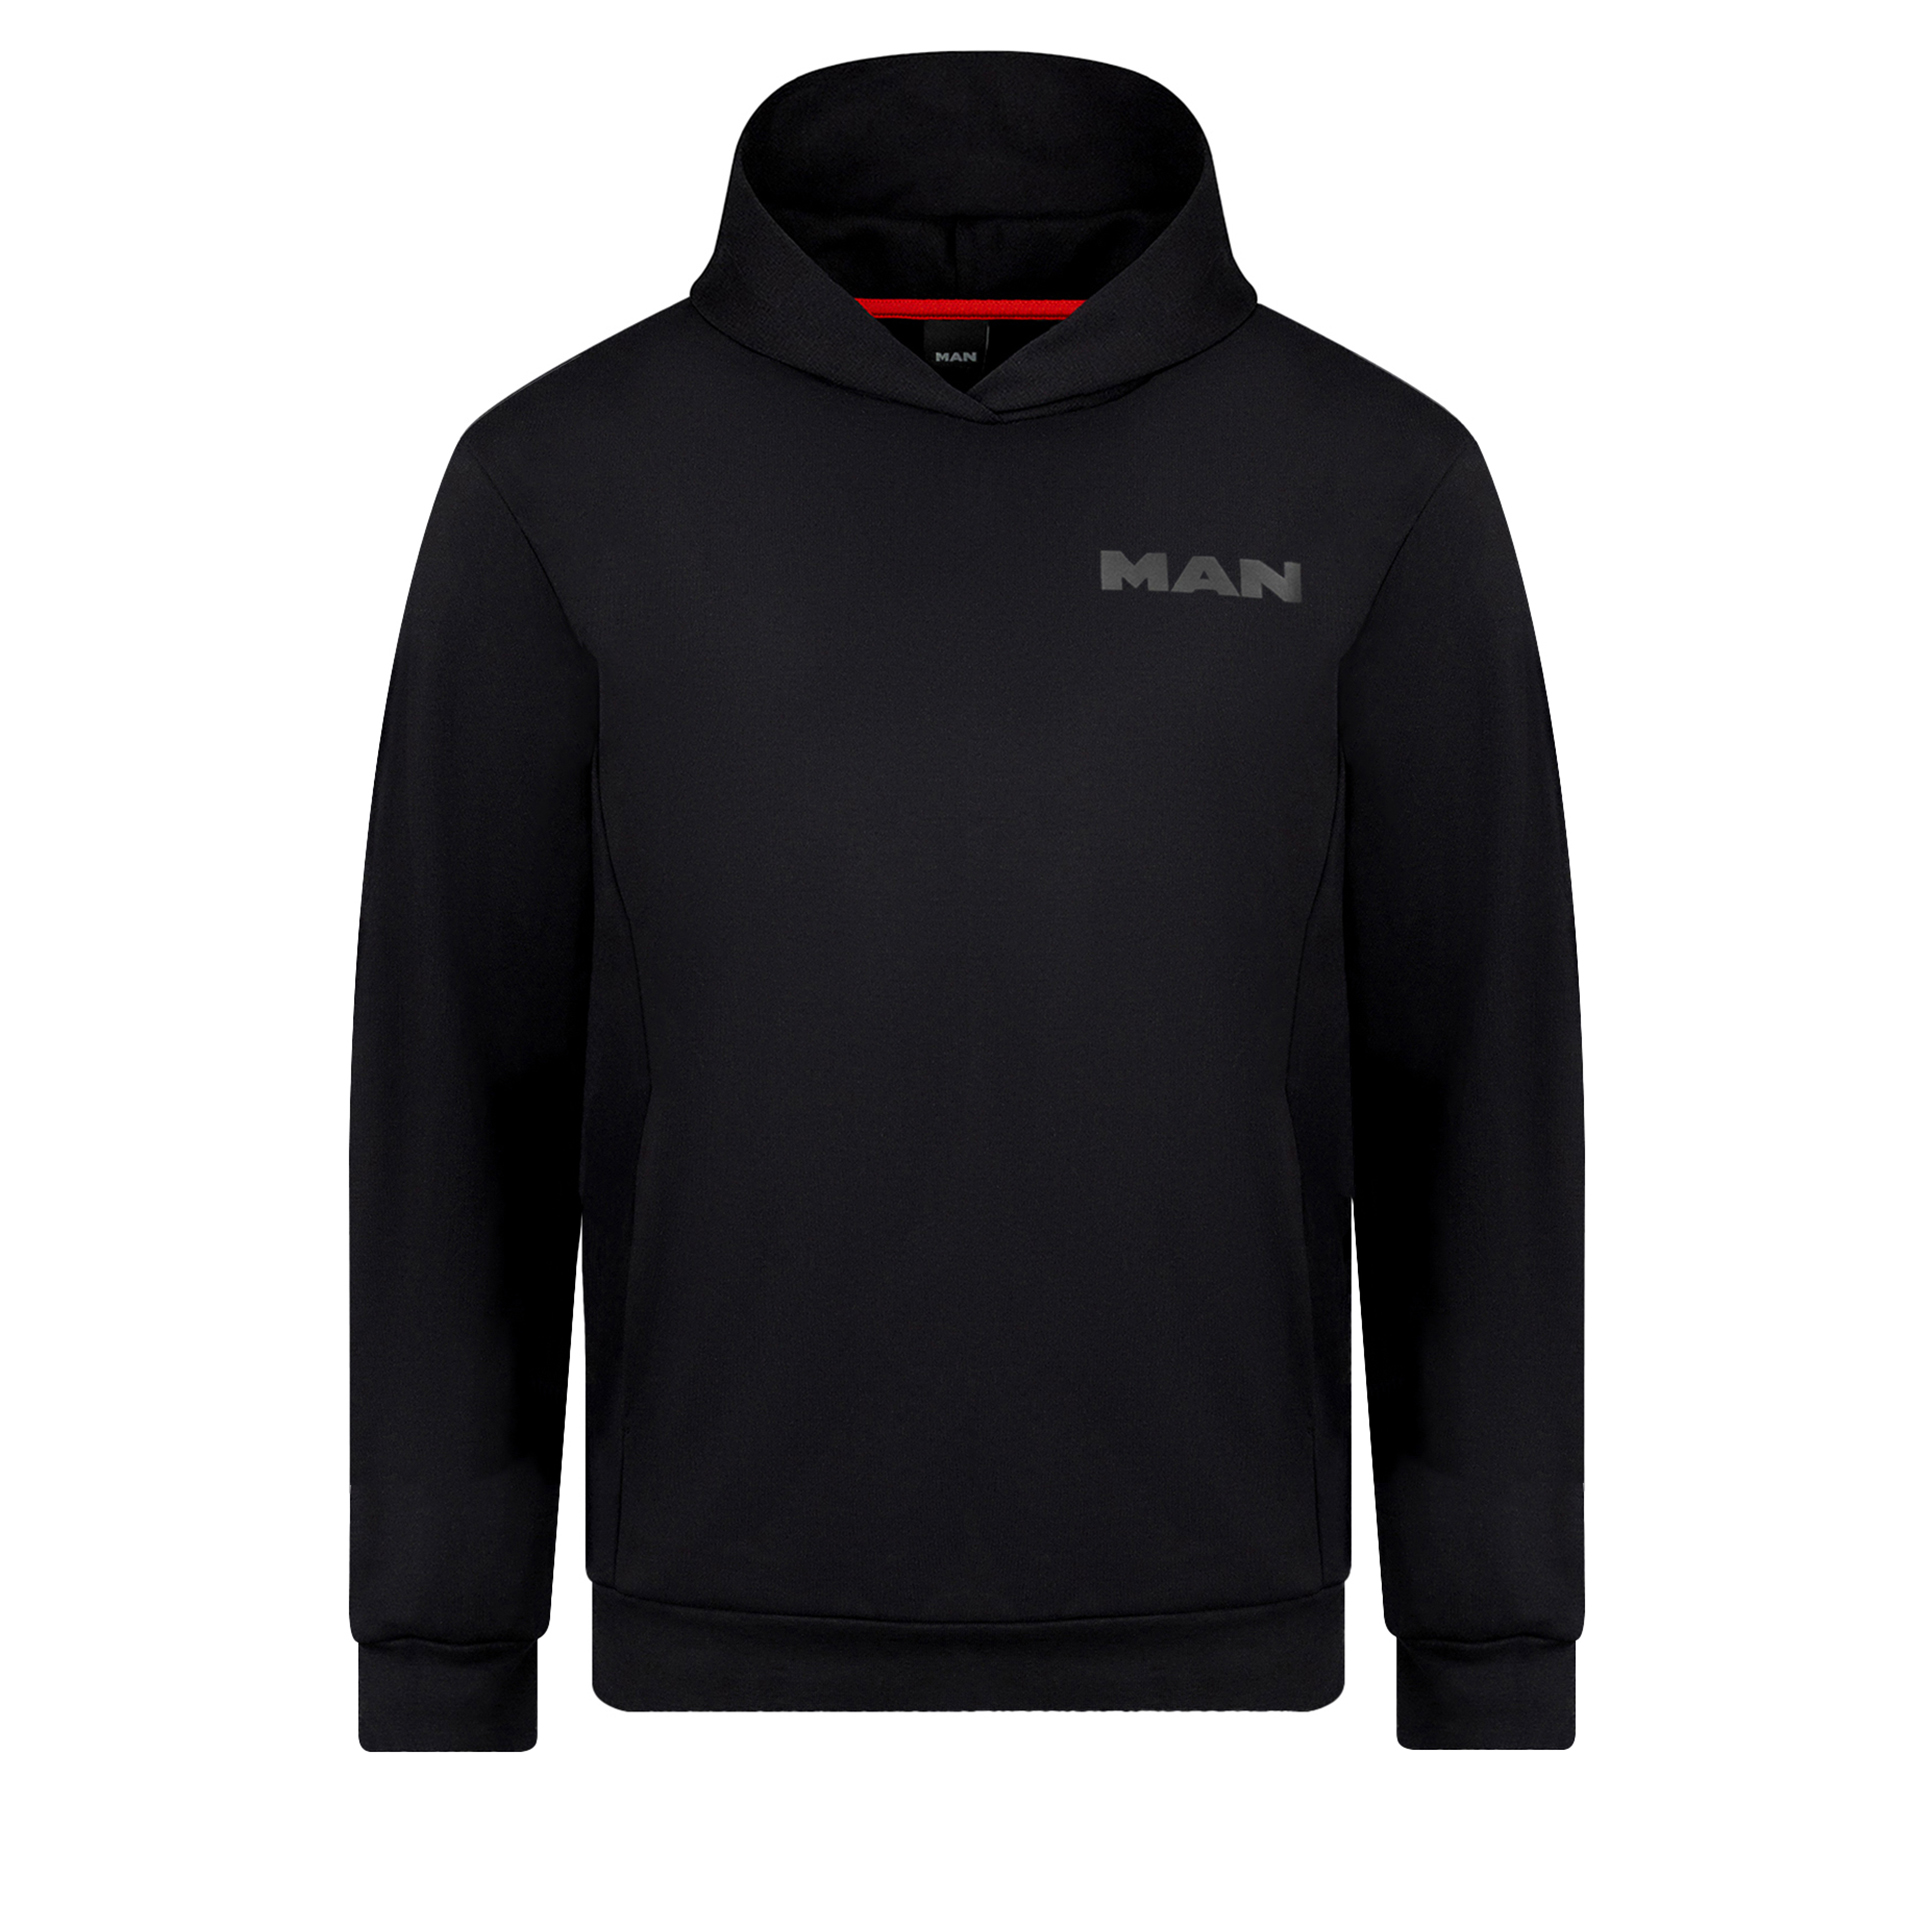 MAN Individual S Men's Premium Hoodie Black in Black